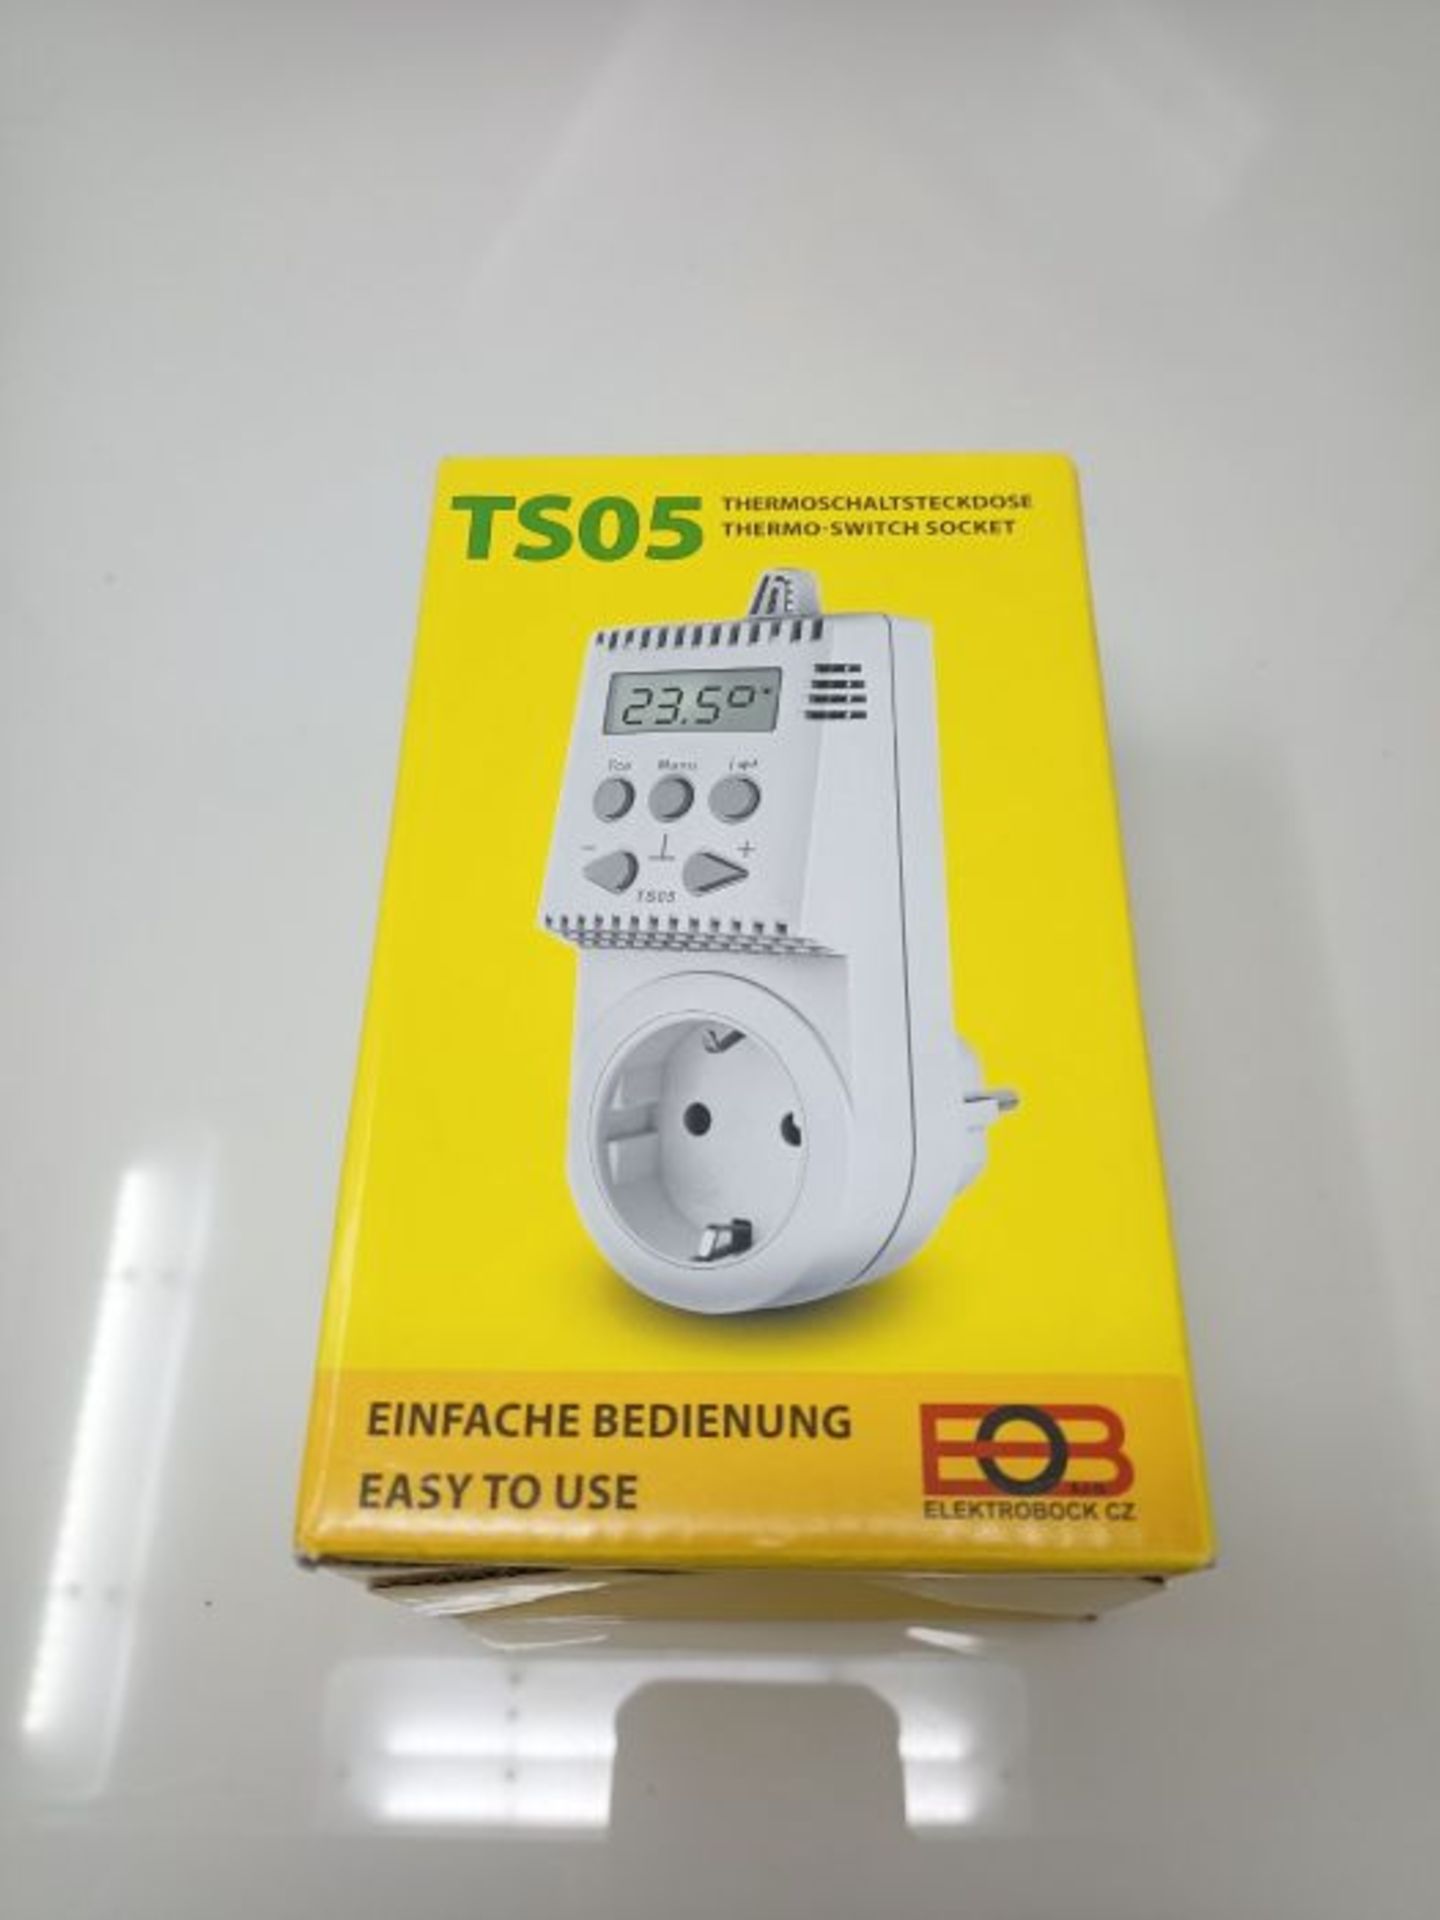 Elektrobock, Plug Thermostat TS05, Thermostat Infrared Heating. - Image 2 of 3